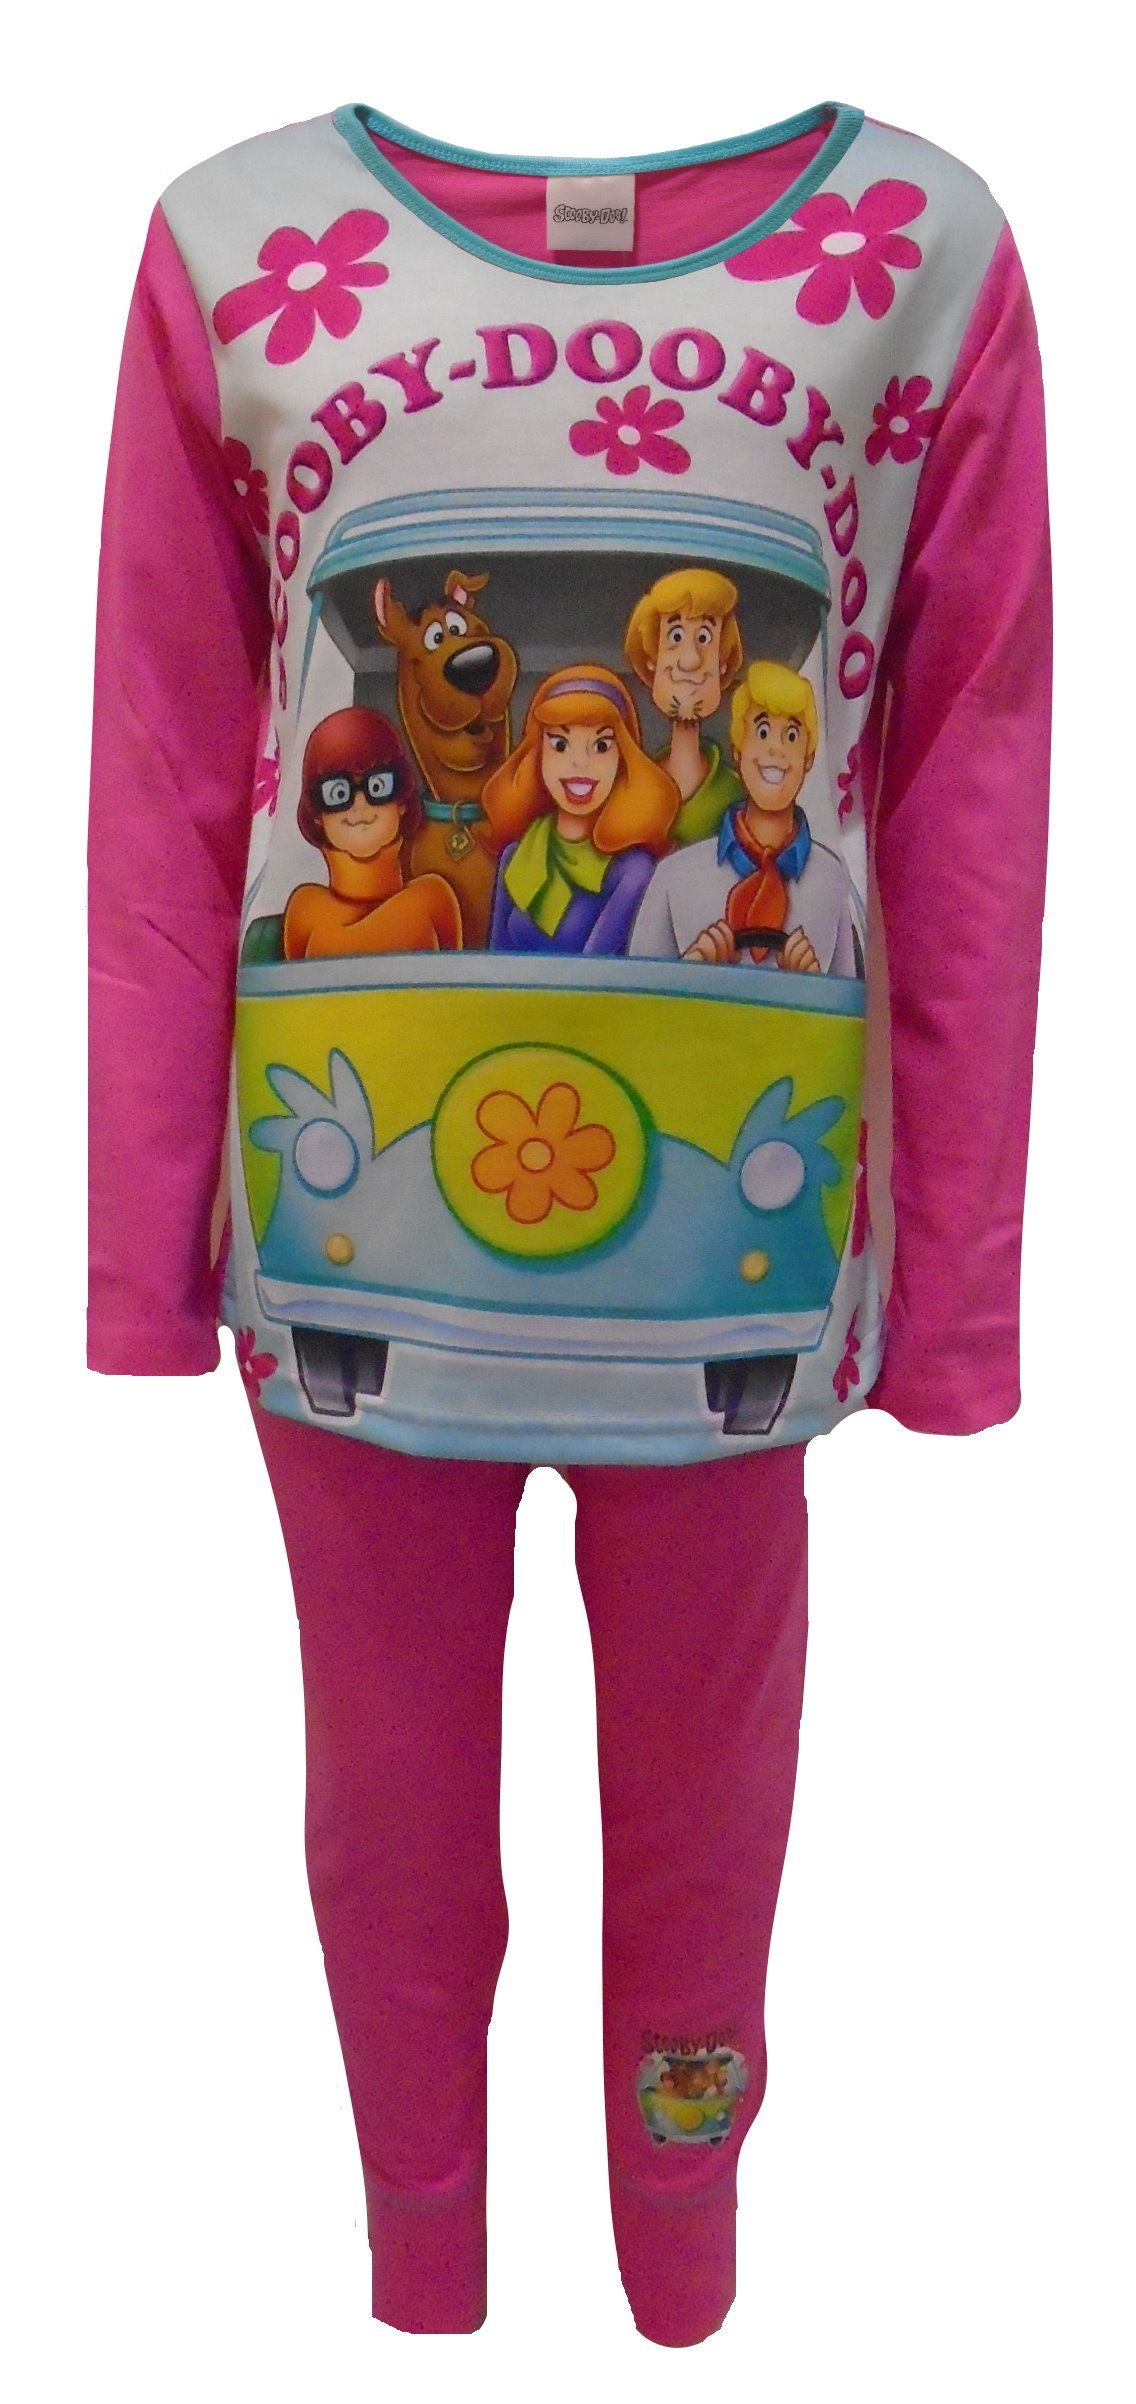 Scooby Doo "Mystery" Girl's Pyjamas